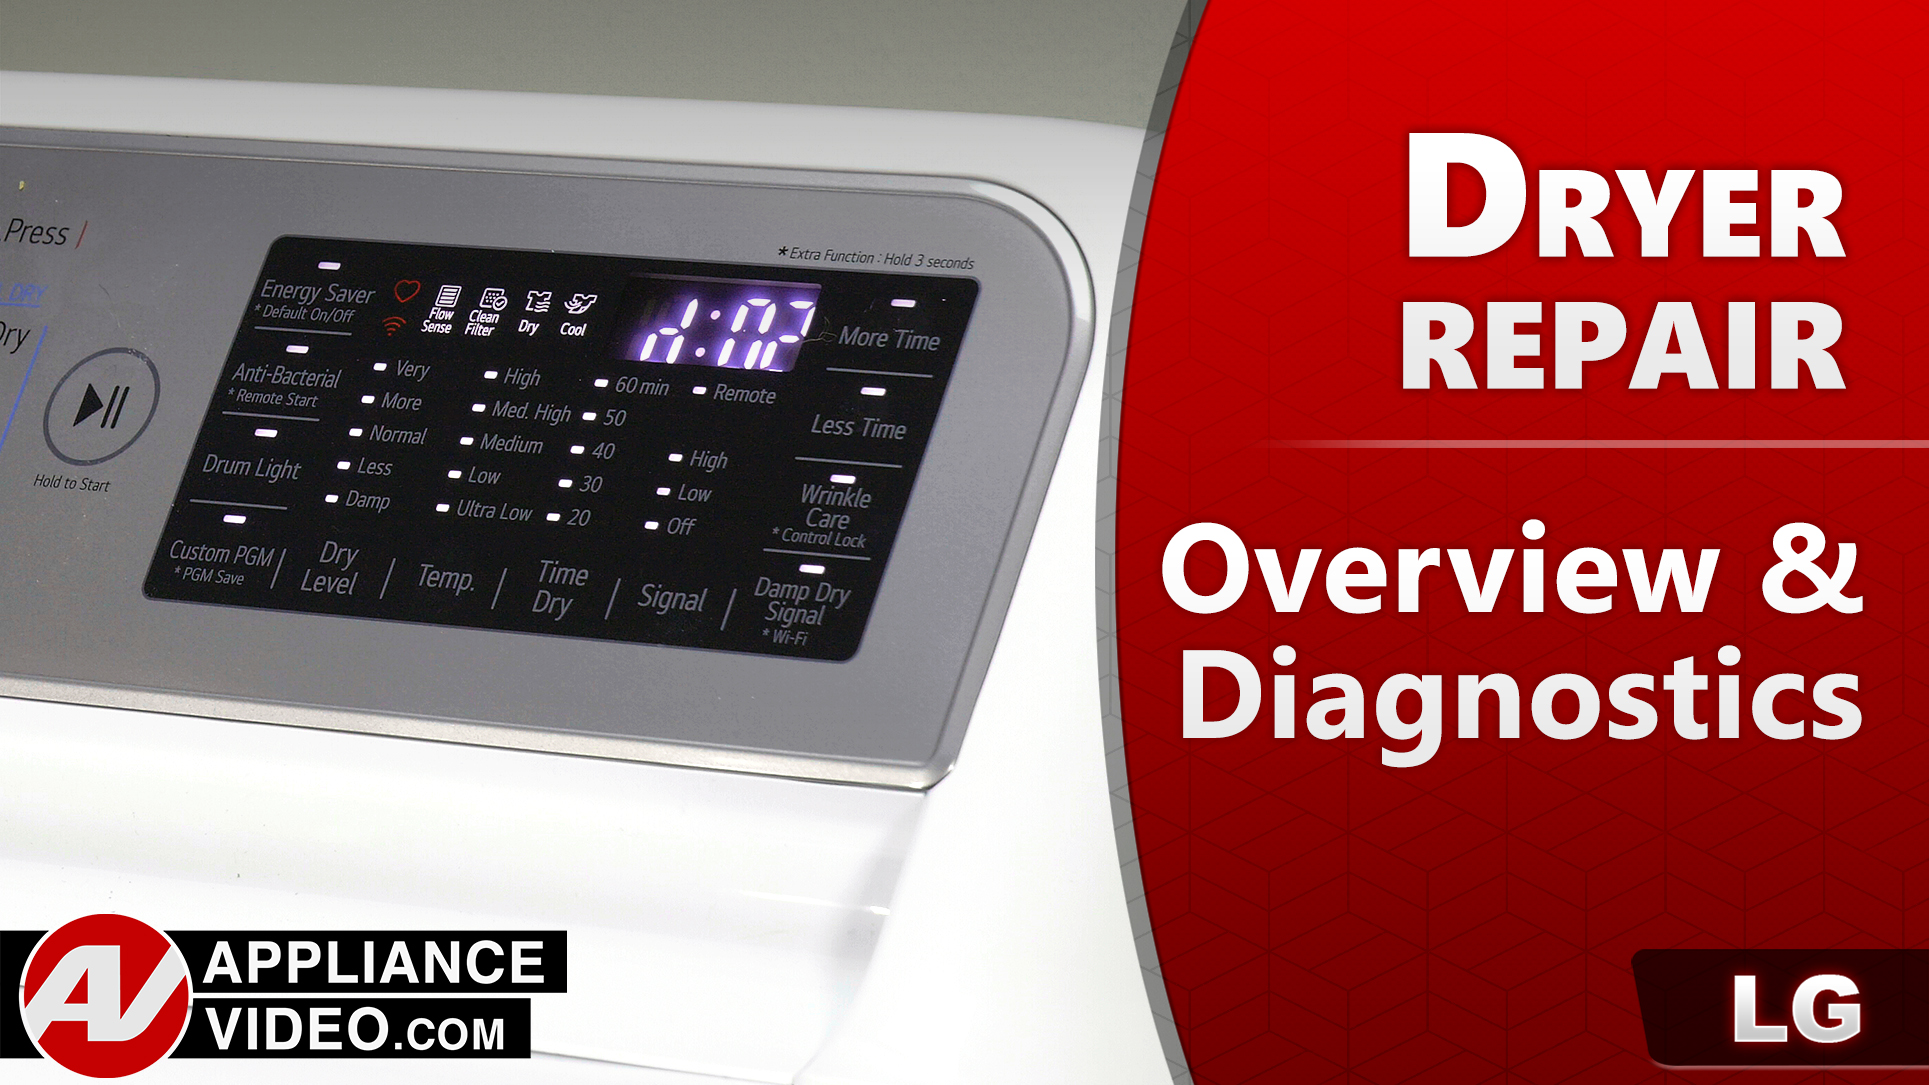 LG DLG7301WE Dryer – Overview / Diagnostics